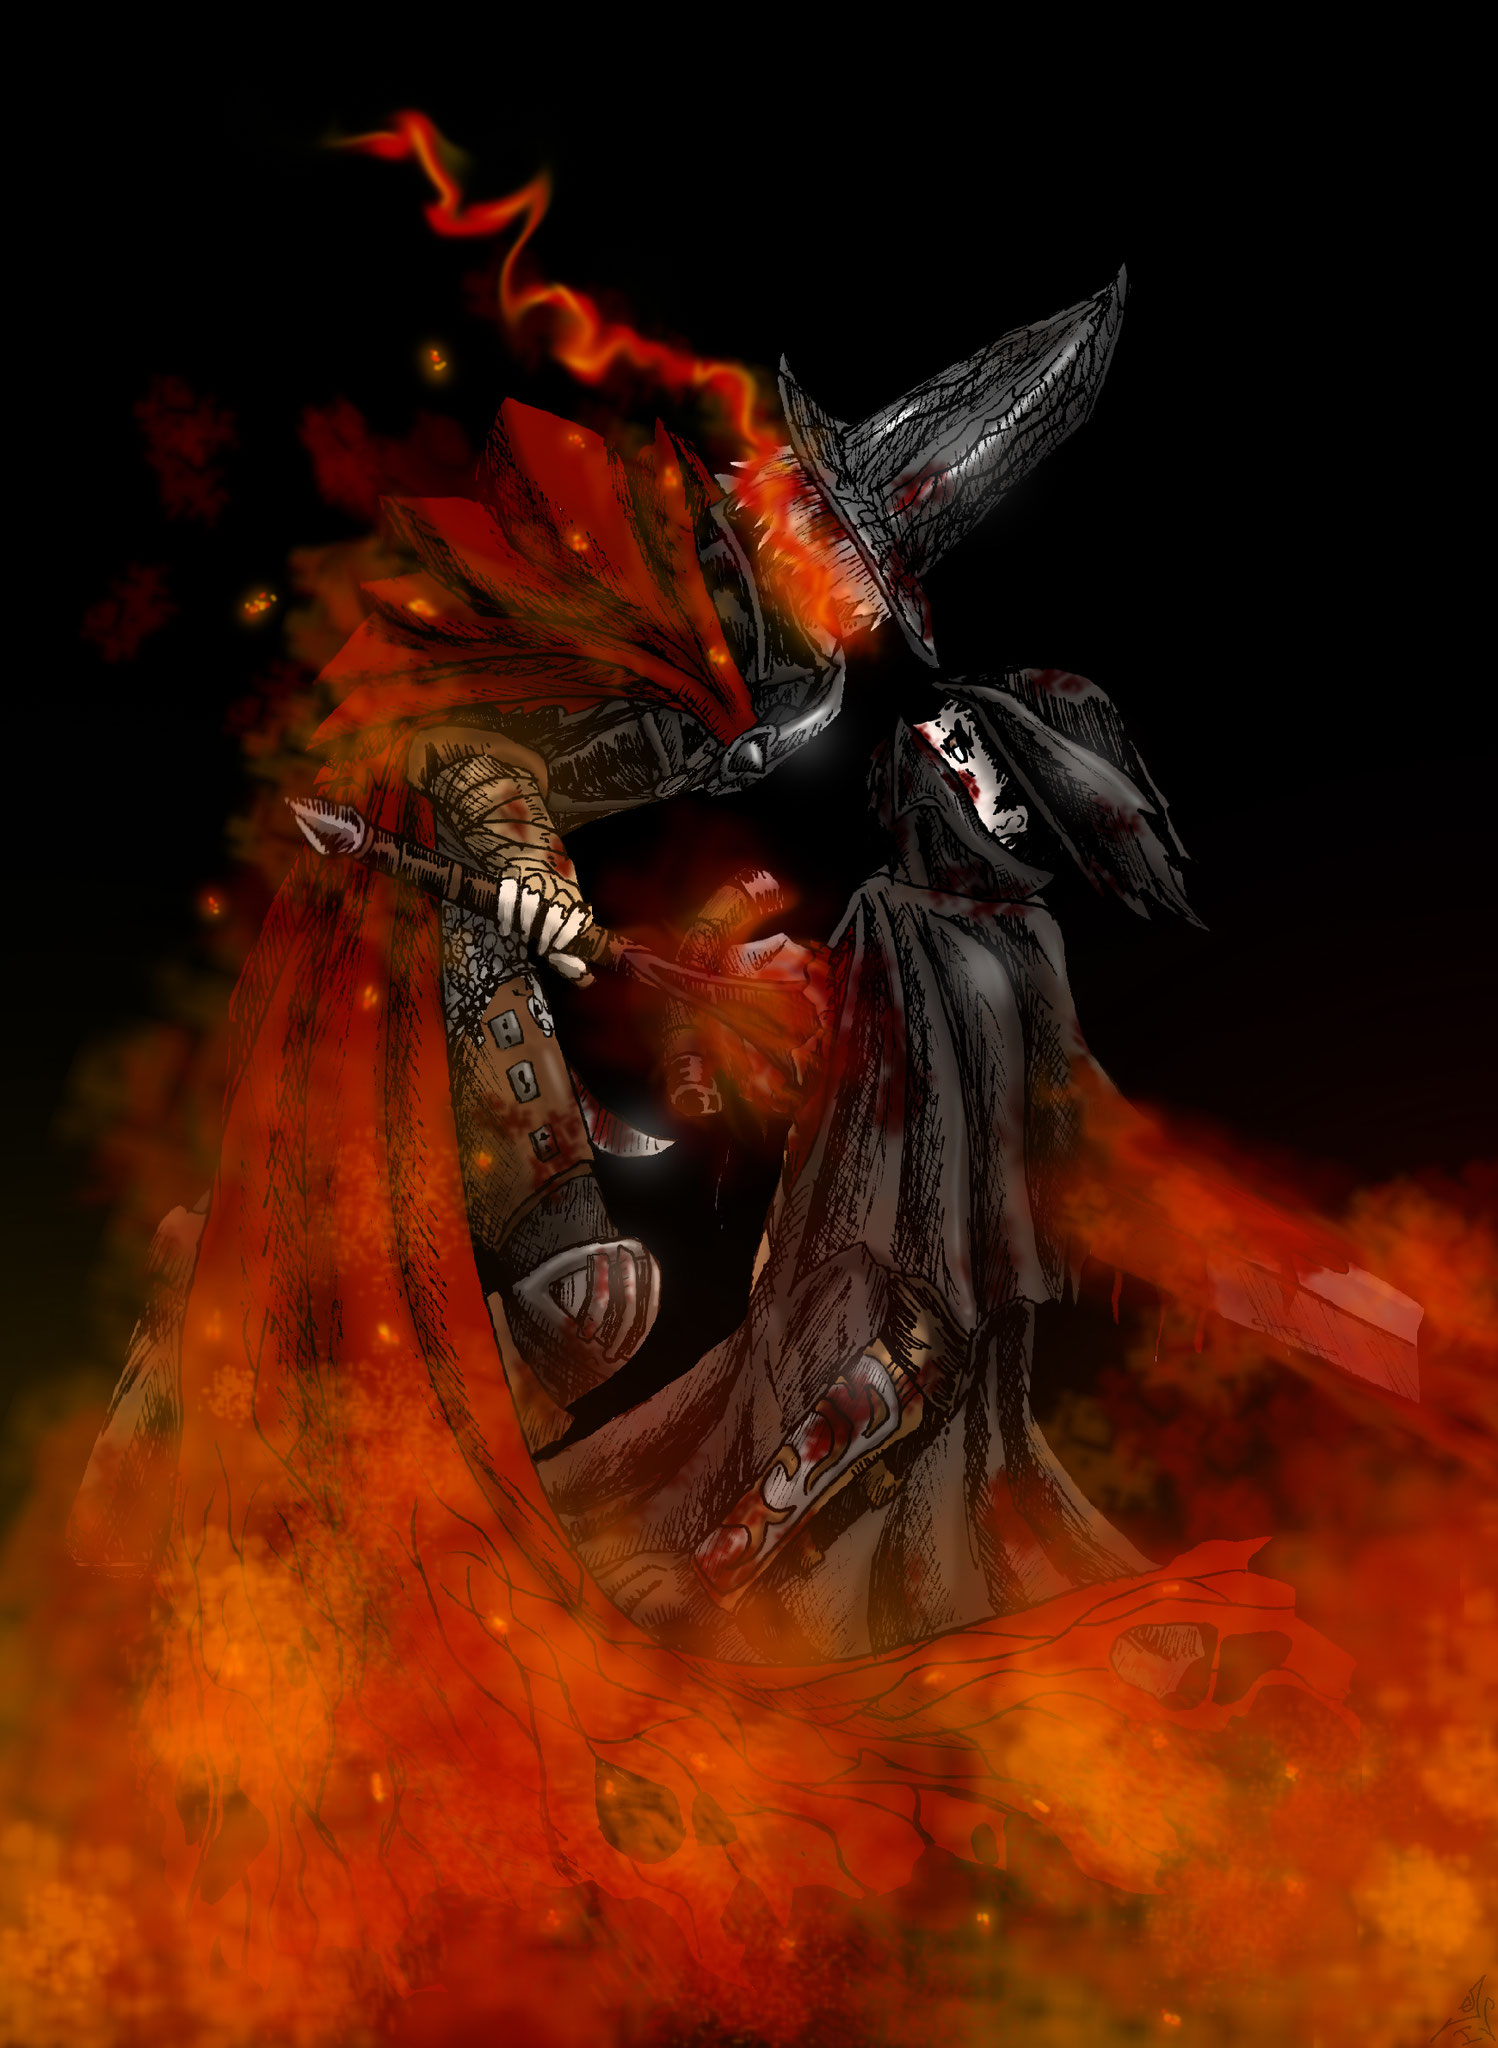 Abyss watcher vs bloodborne's hunter - Dark Souls III and Bloodborne